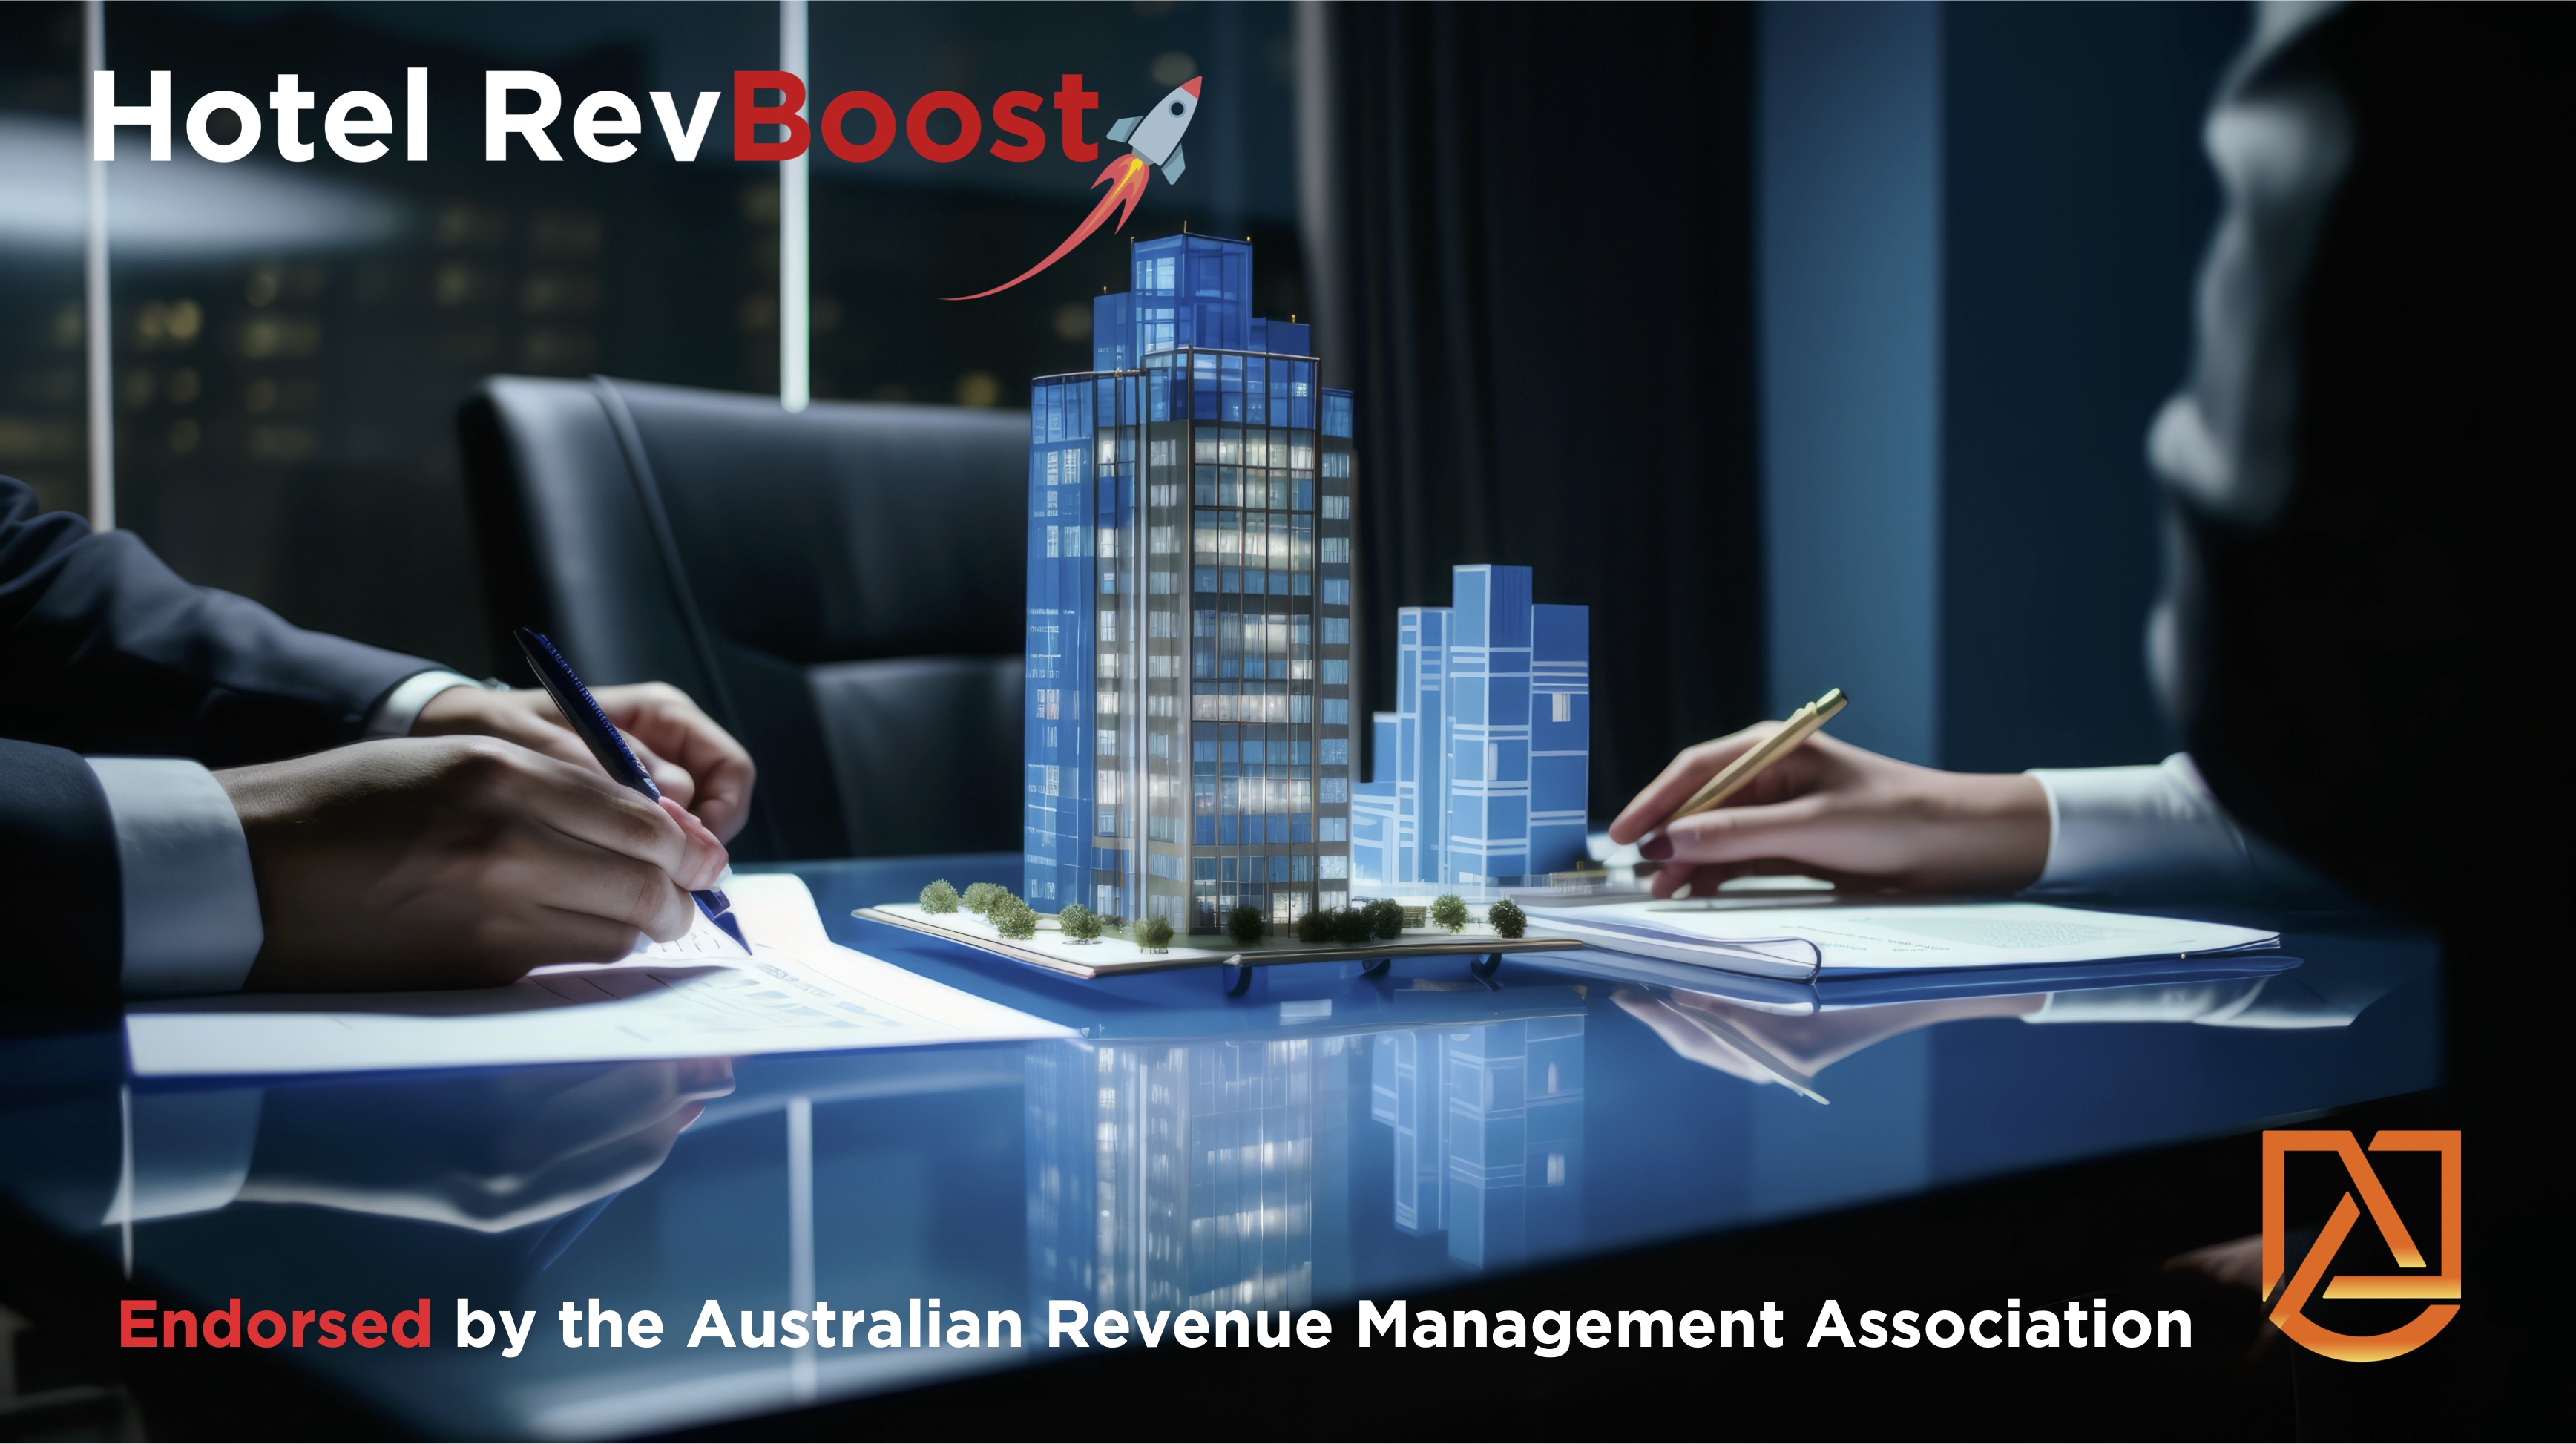 ARMA - Australian Revenue Management Association Endorses Hotel RevBoost by Intellisoftware